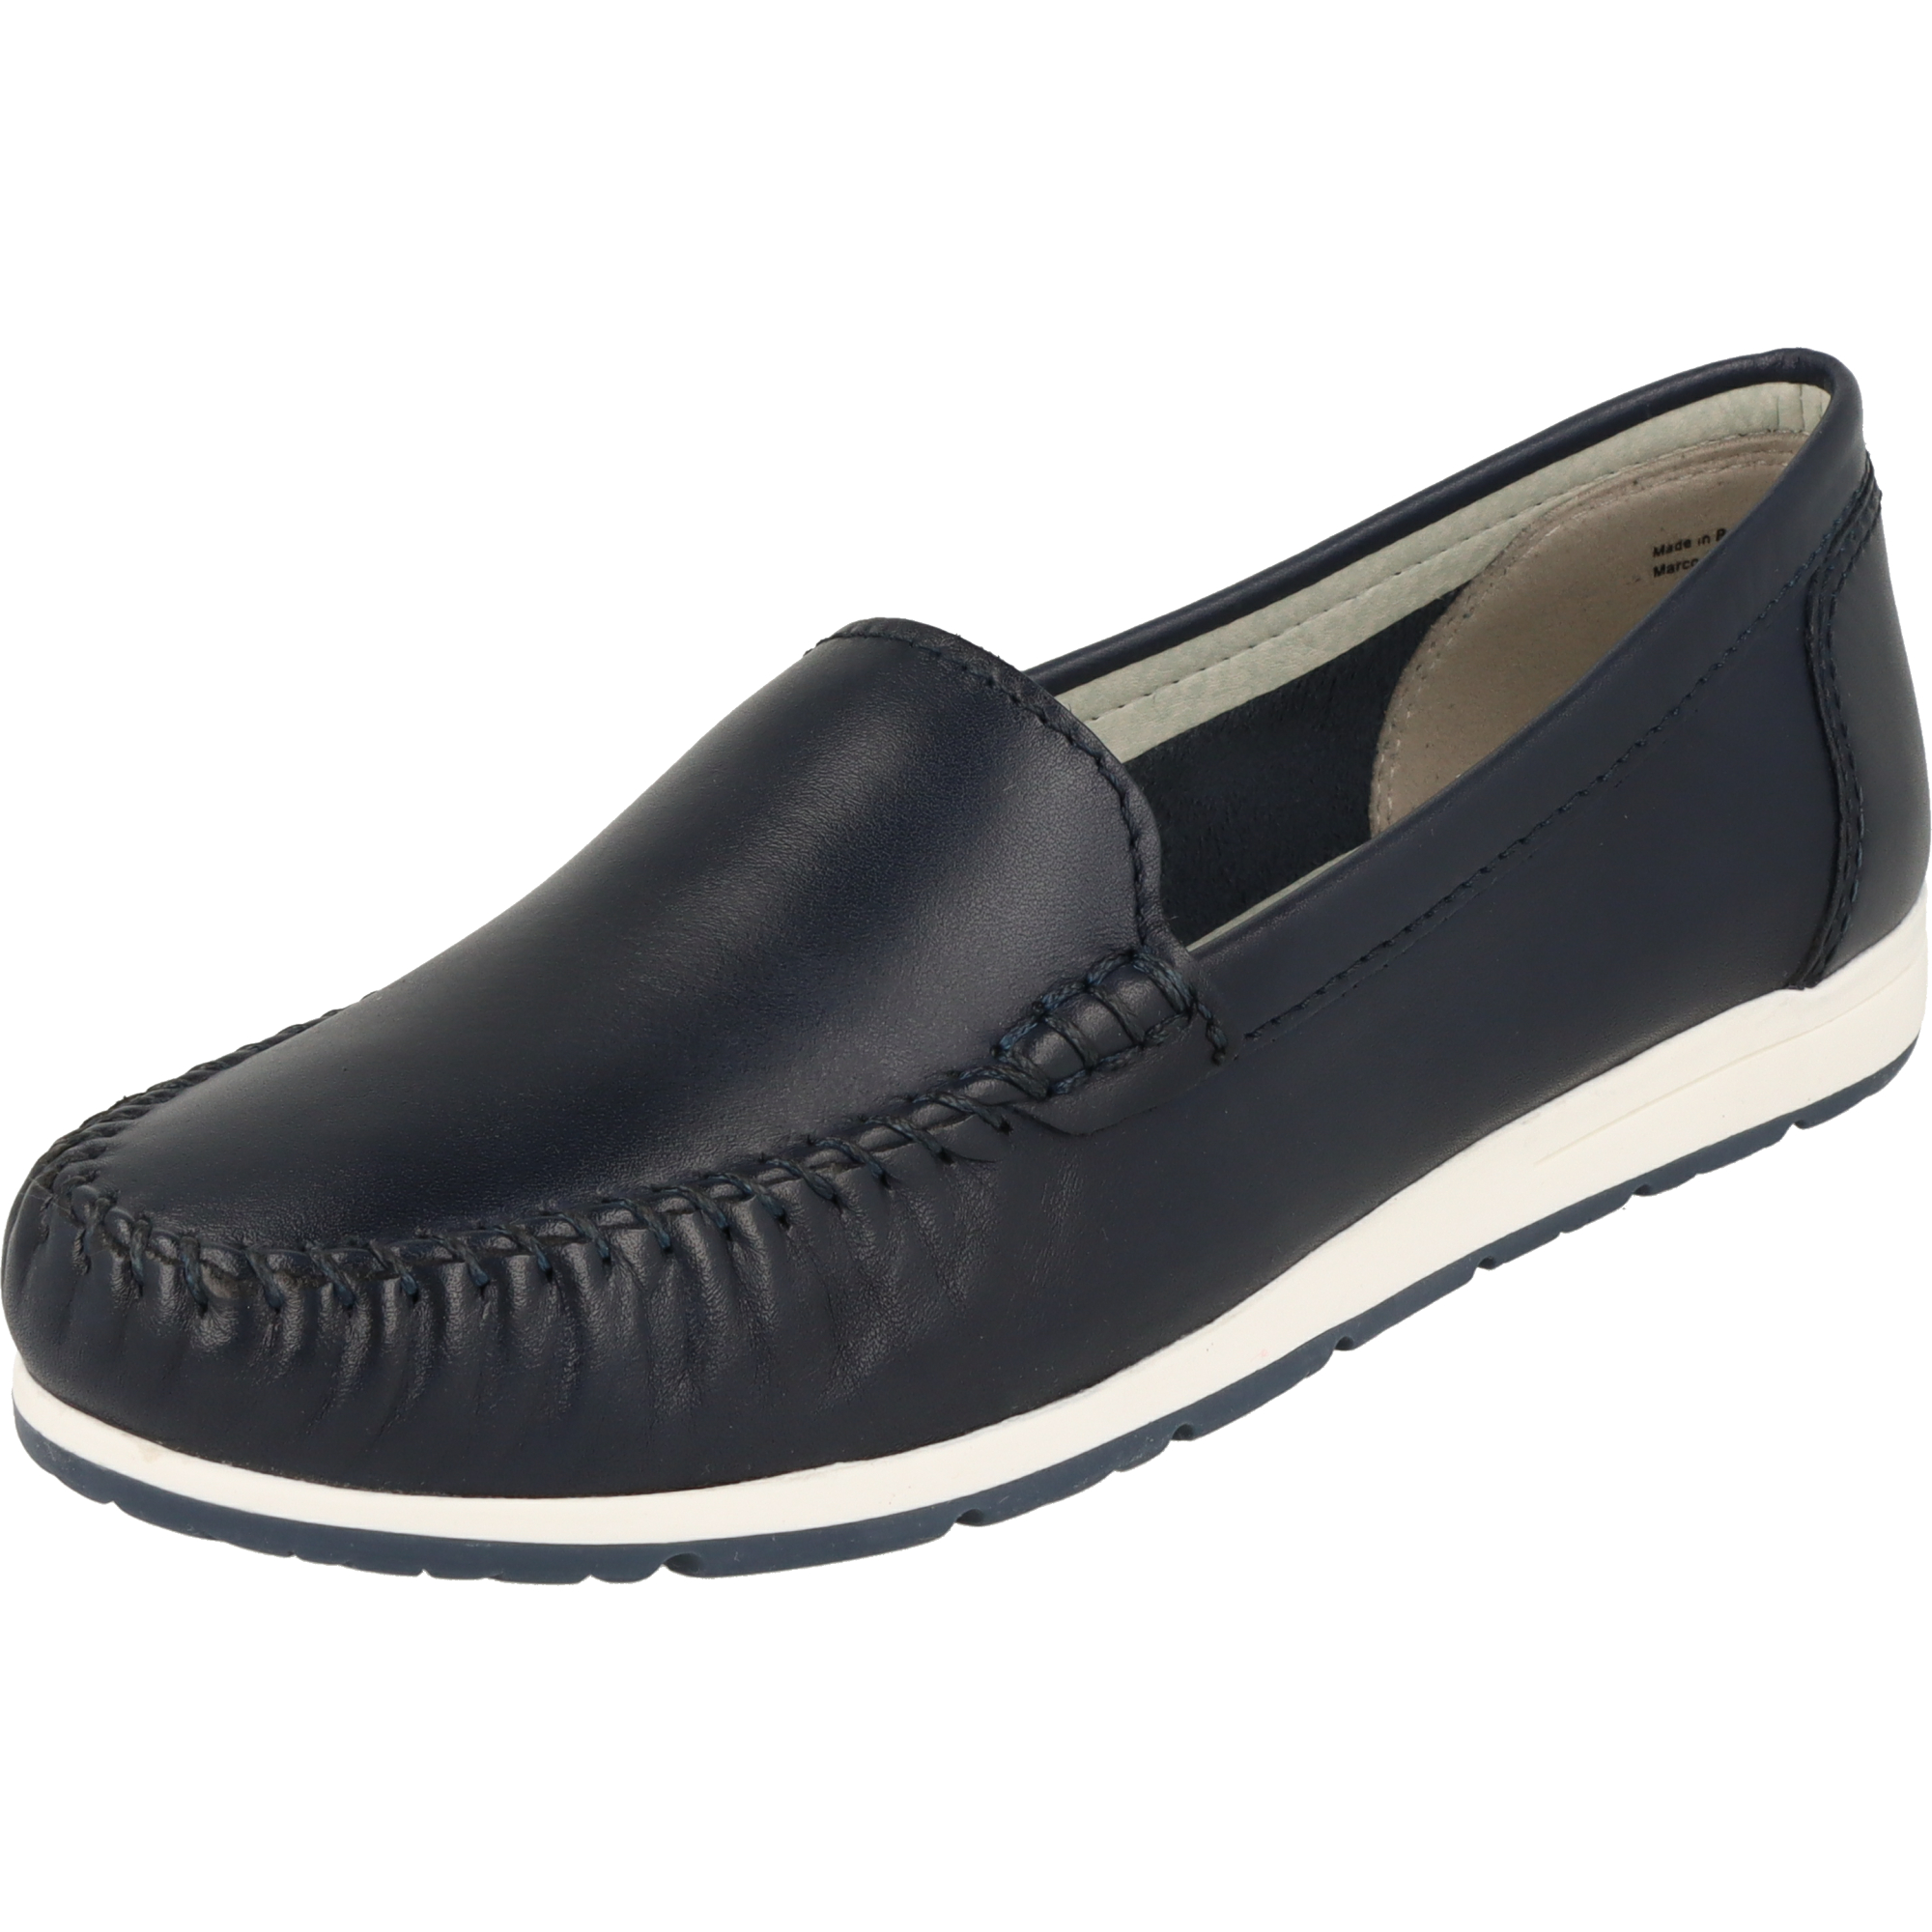 Marco Tozzi 2-24600-42 Damen Schuhe Komfort Leder Mokassins Navy